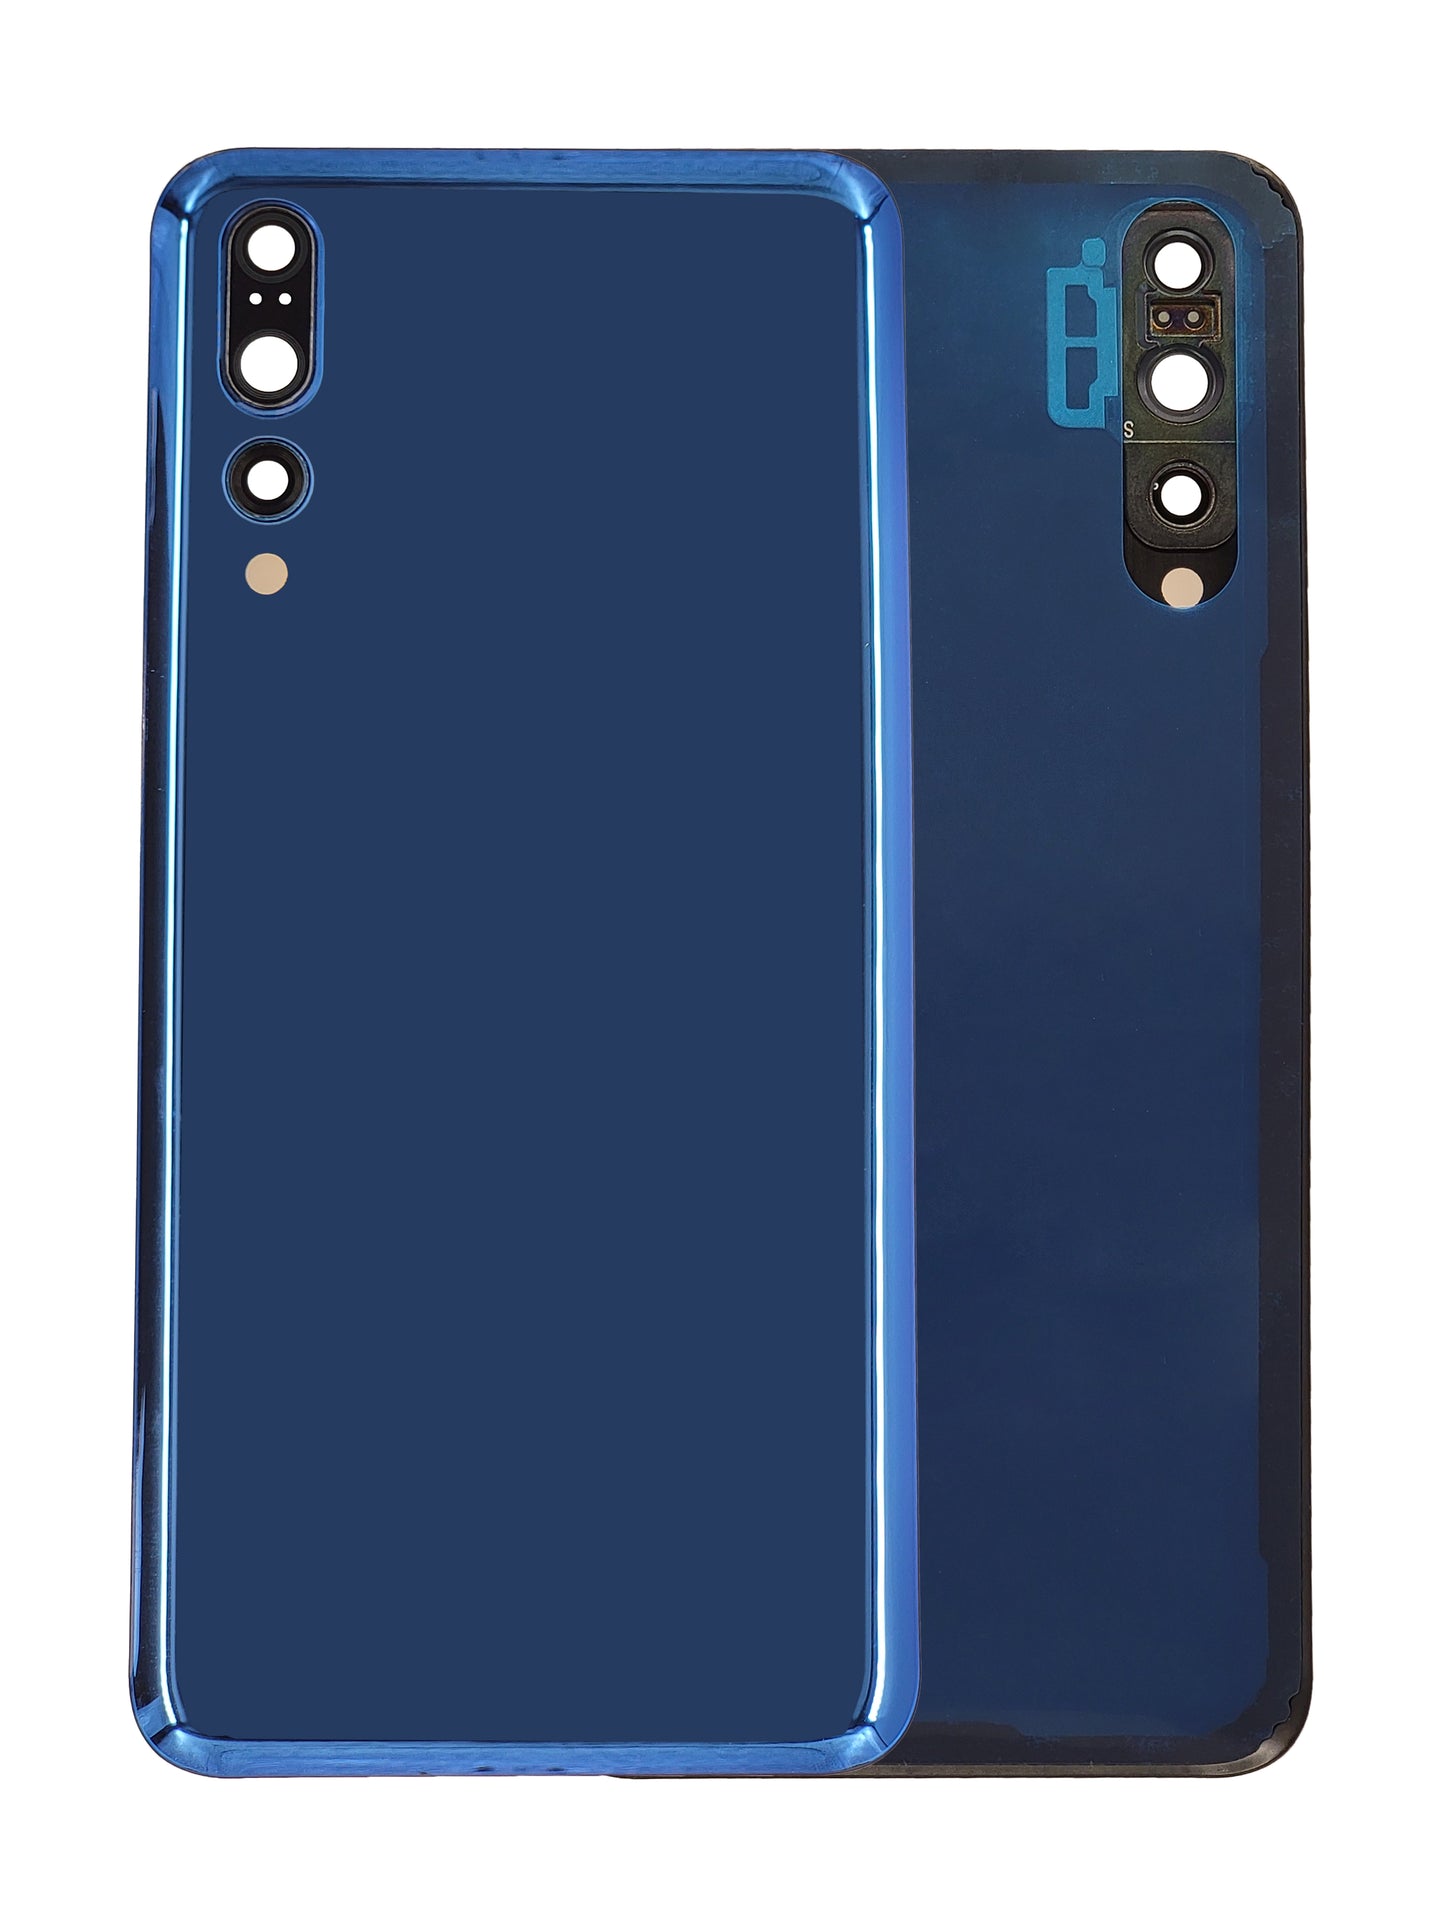 HW P20 Pro Back Cover (Blue)